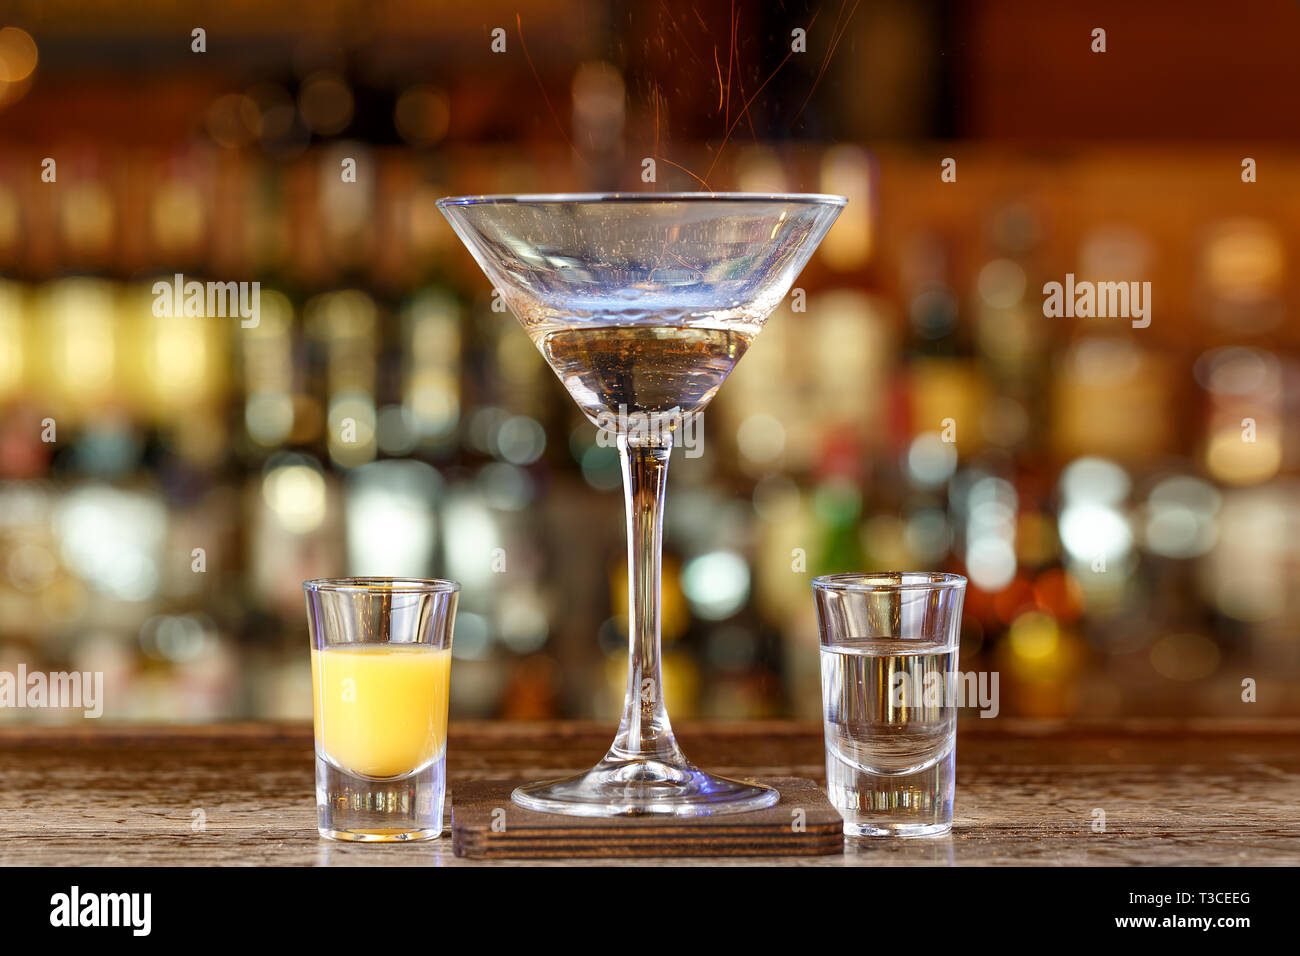 Malibu Rum Immagini E Fotos Stock Alamy